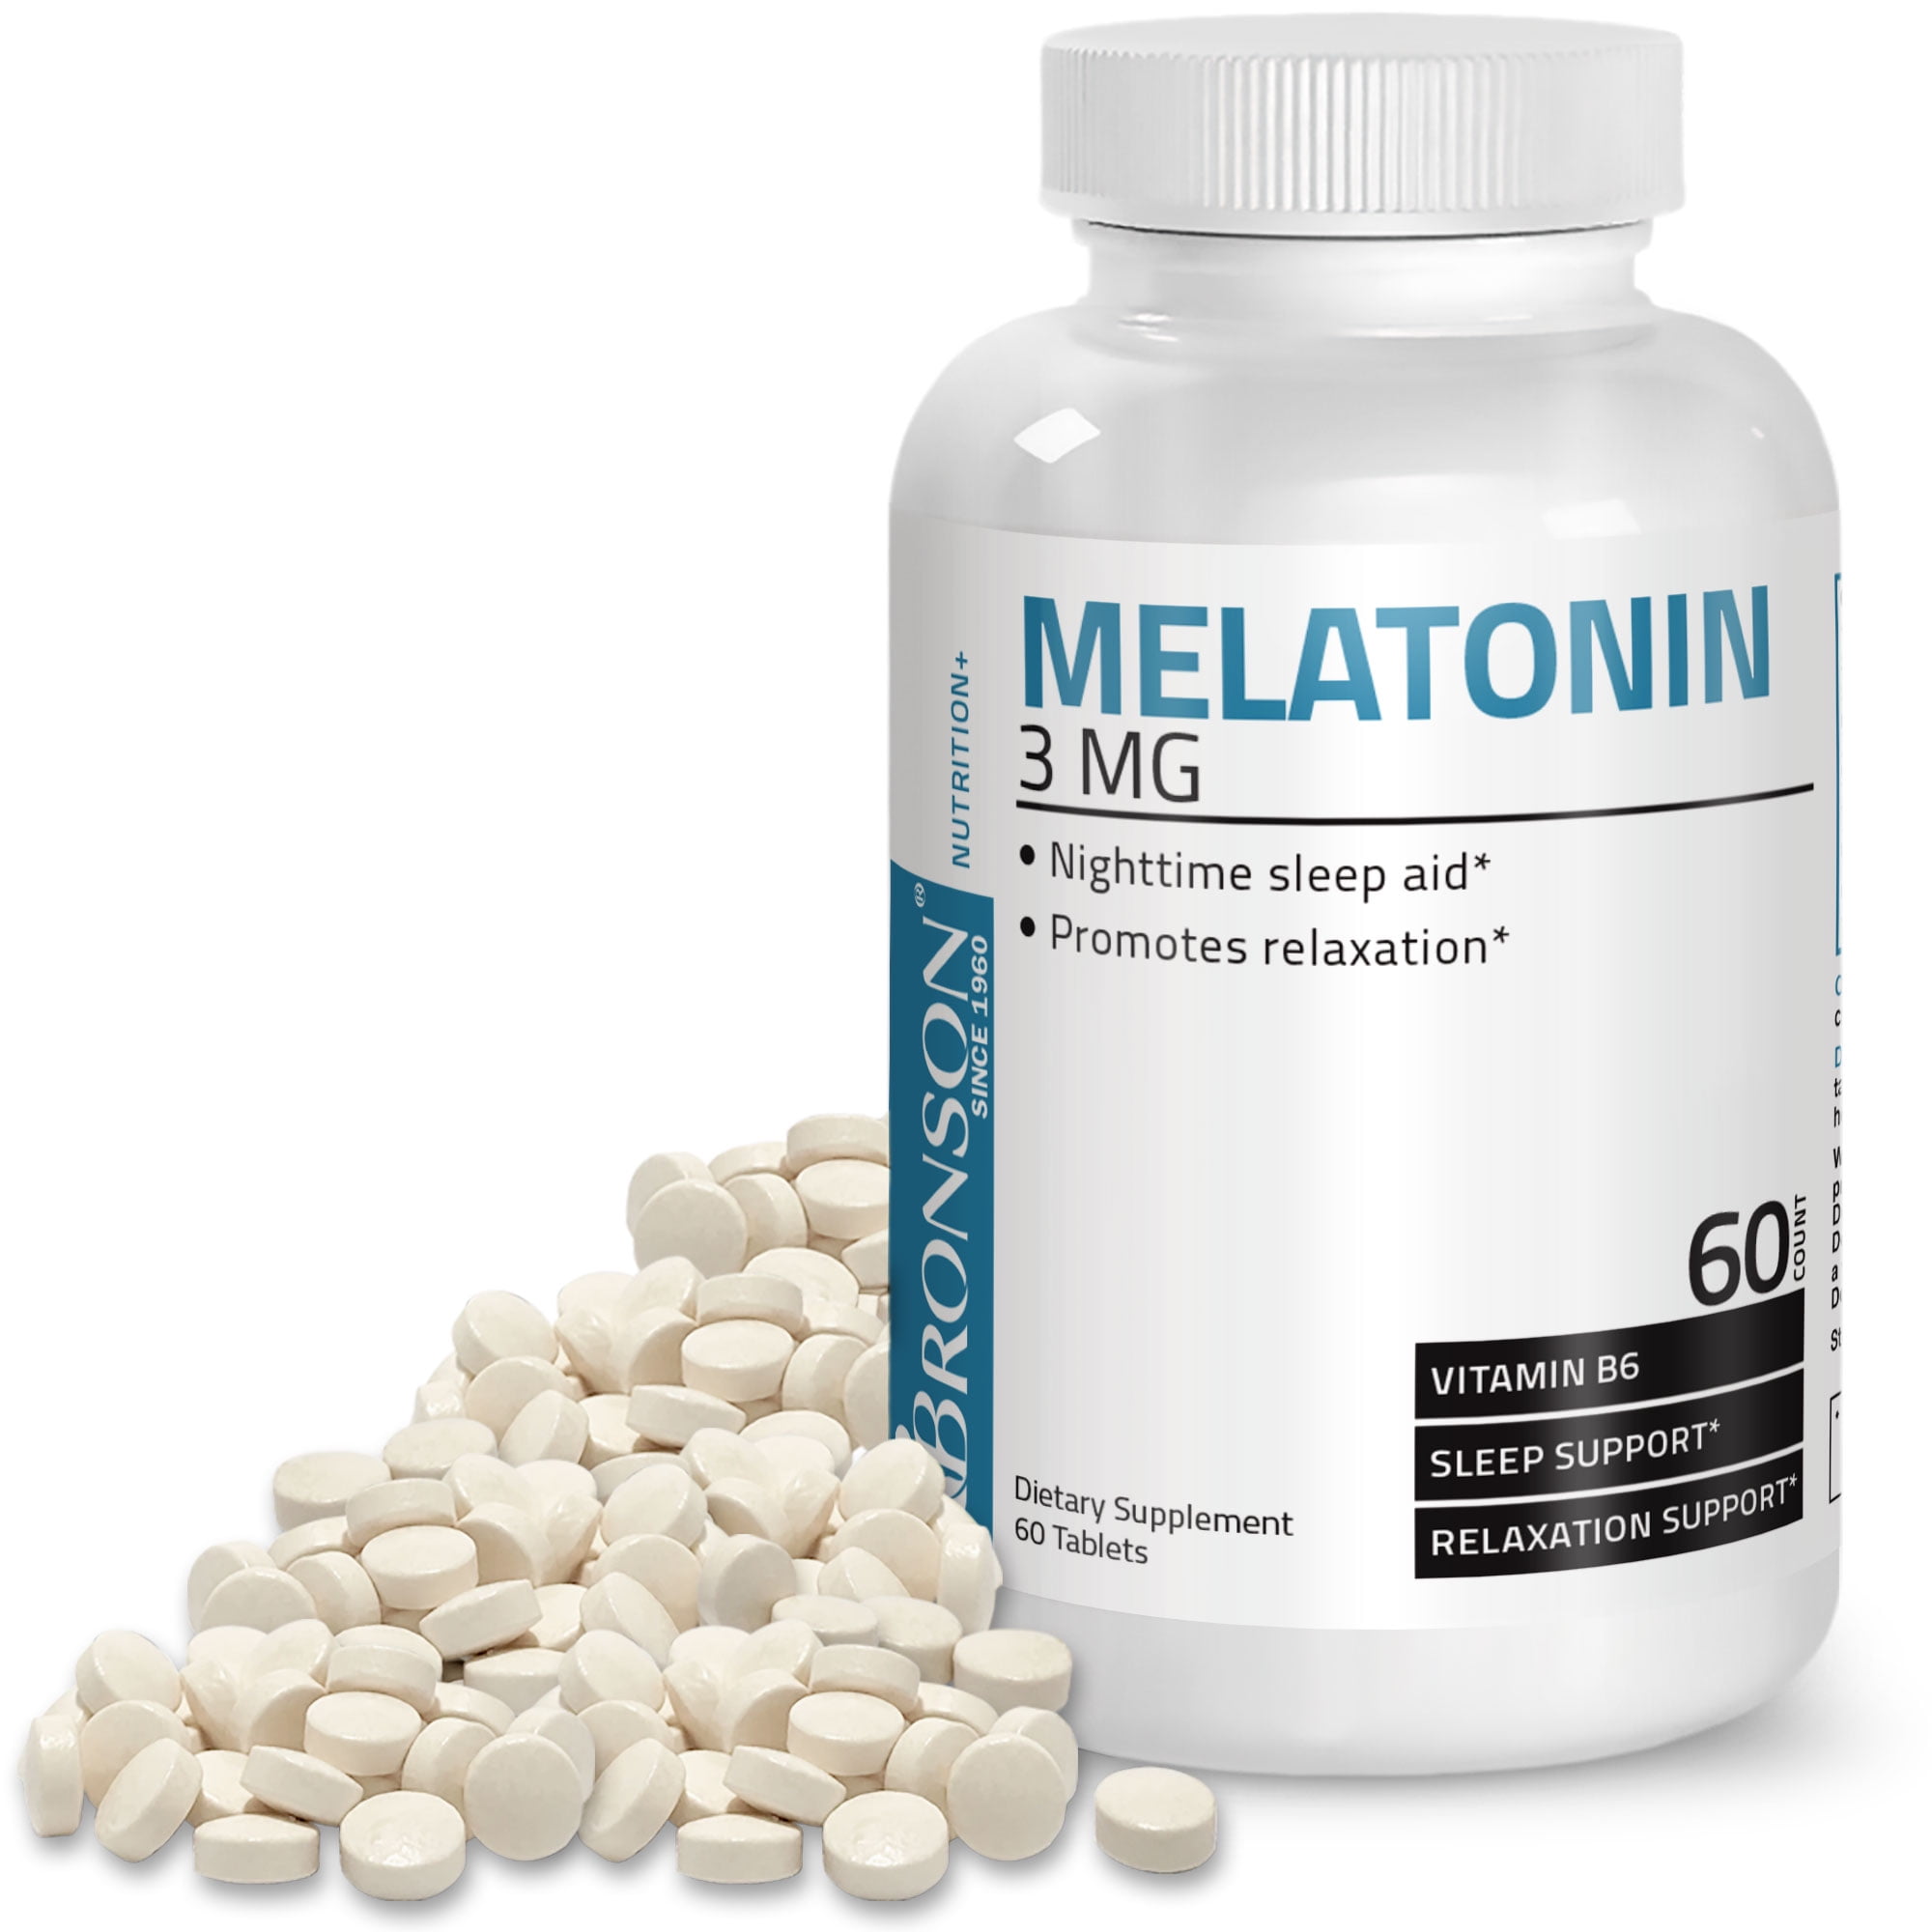 melatonina